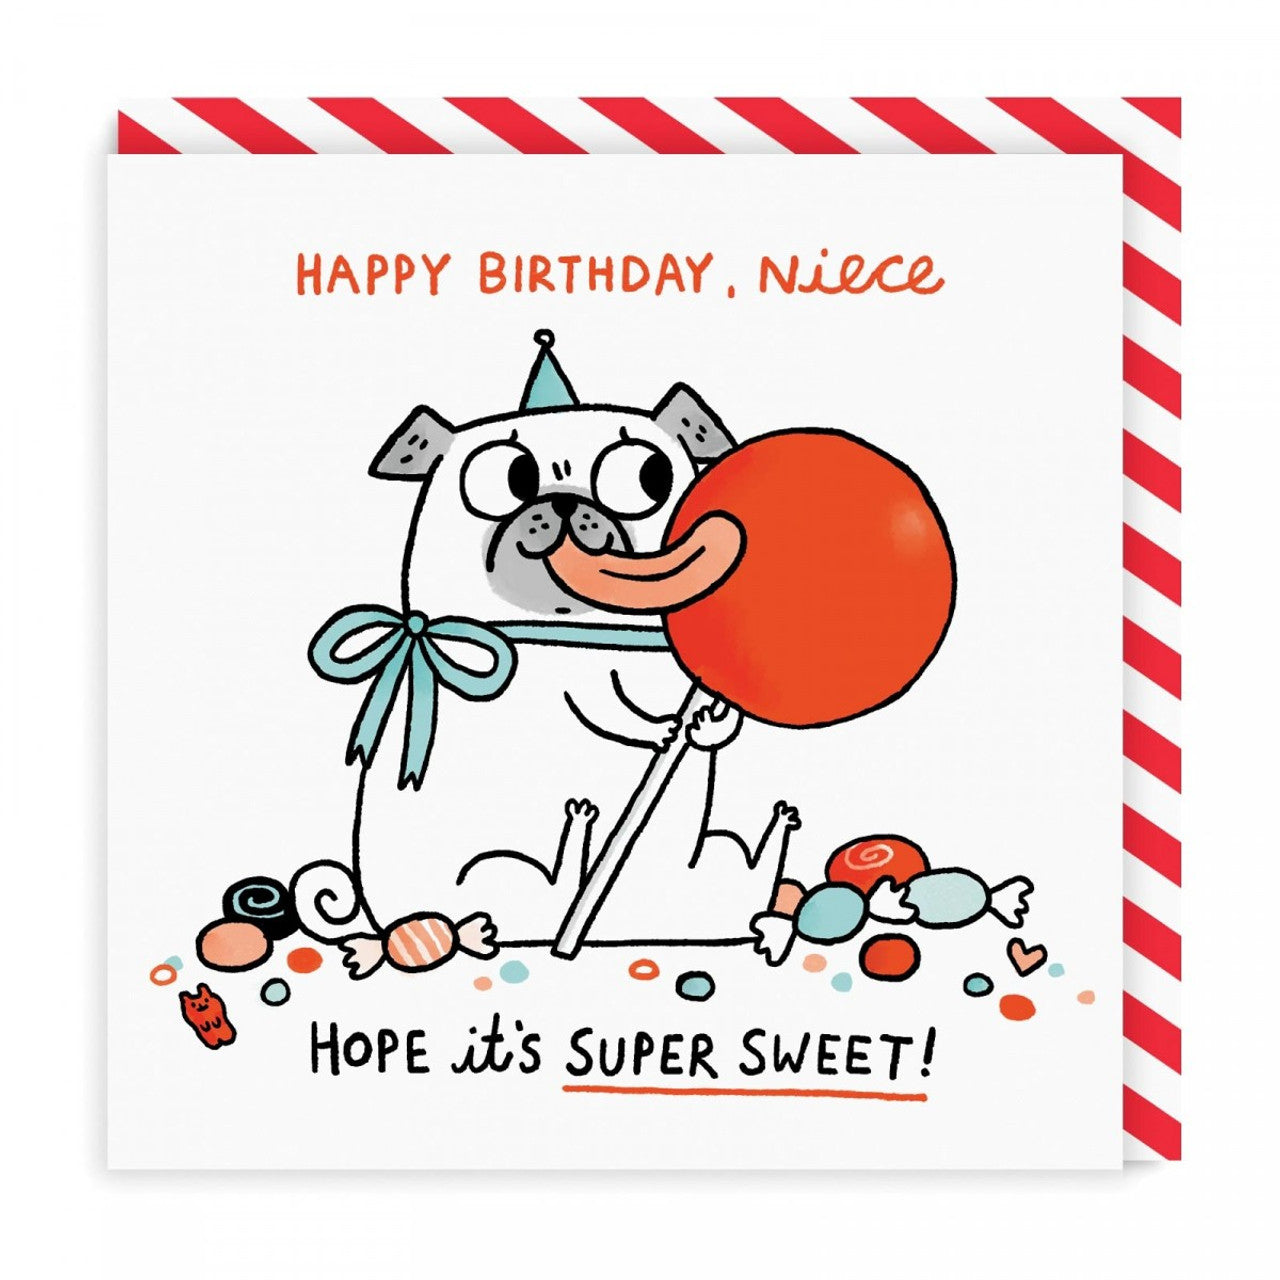 Niece Birthday Card text reading "Happy Birthday, Niece. Hope it's super sweet"